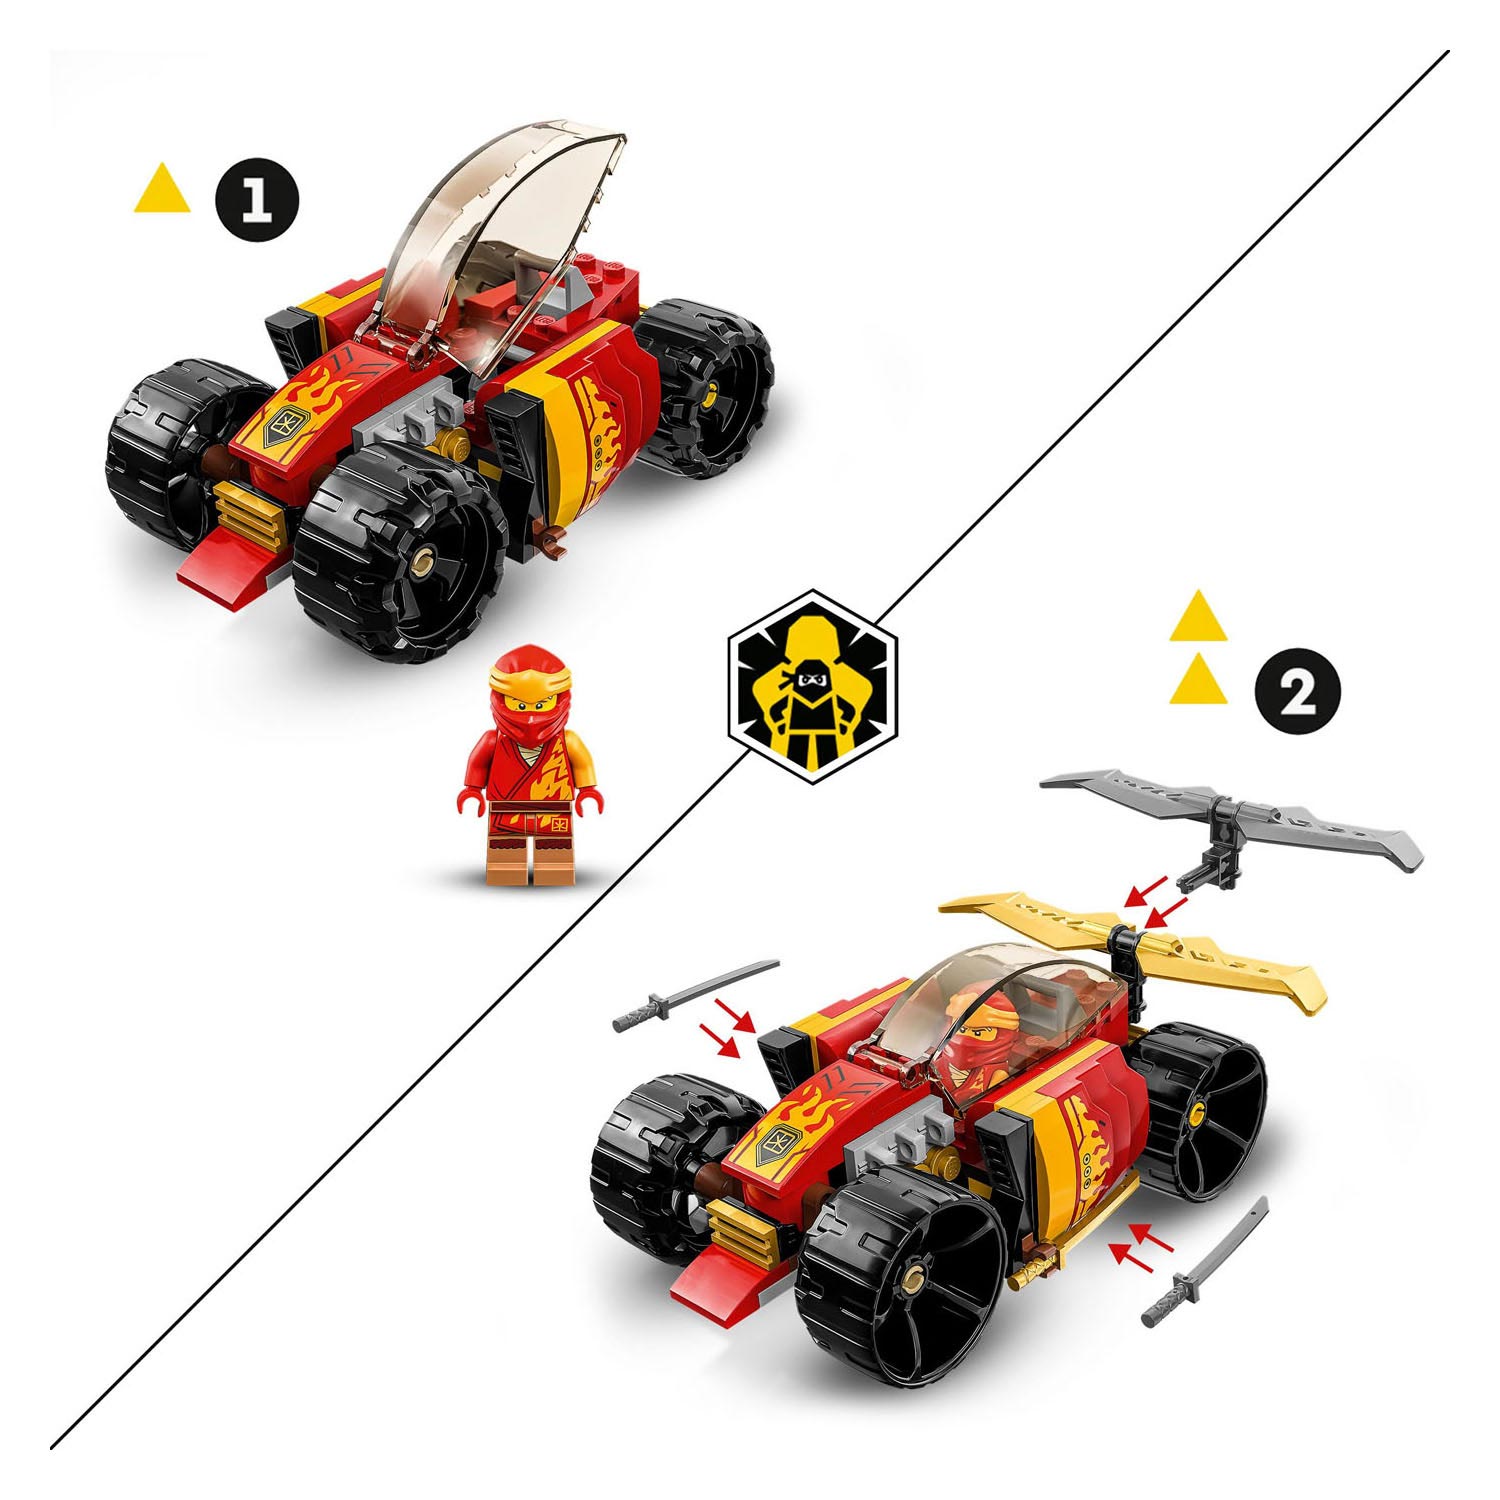 LEGO Ninjago 71780 Kai's Ninja Racewagen EVO